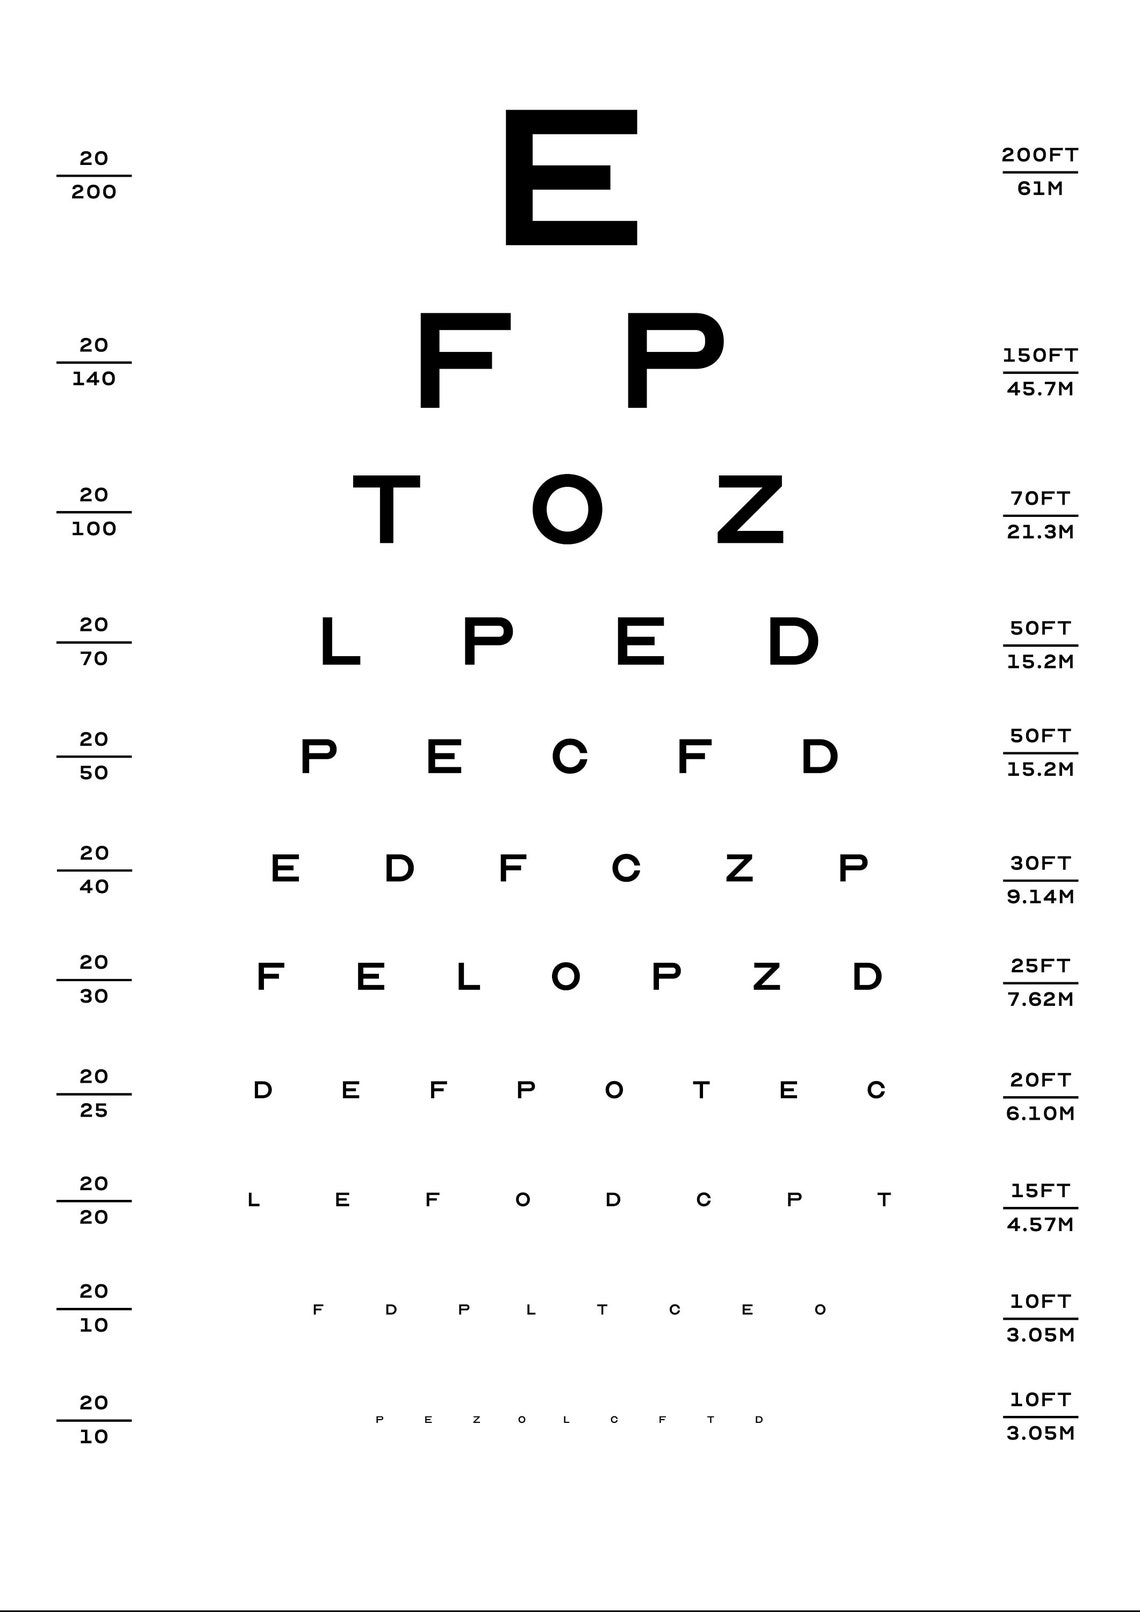 Eye Sight Optician Test Chart-style Black and White | Etsy